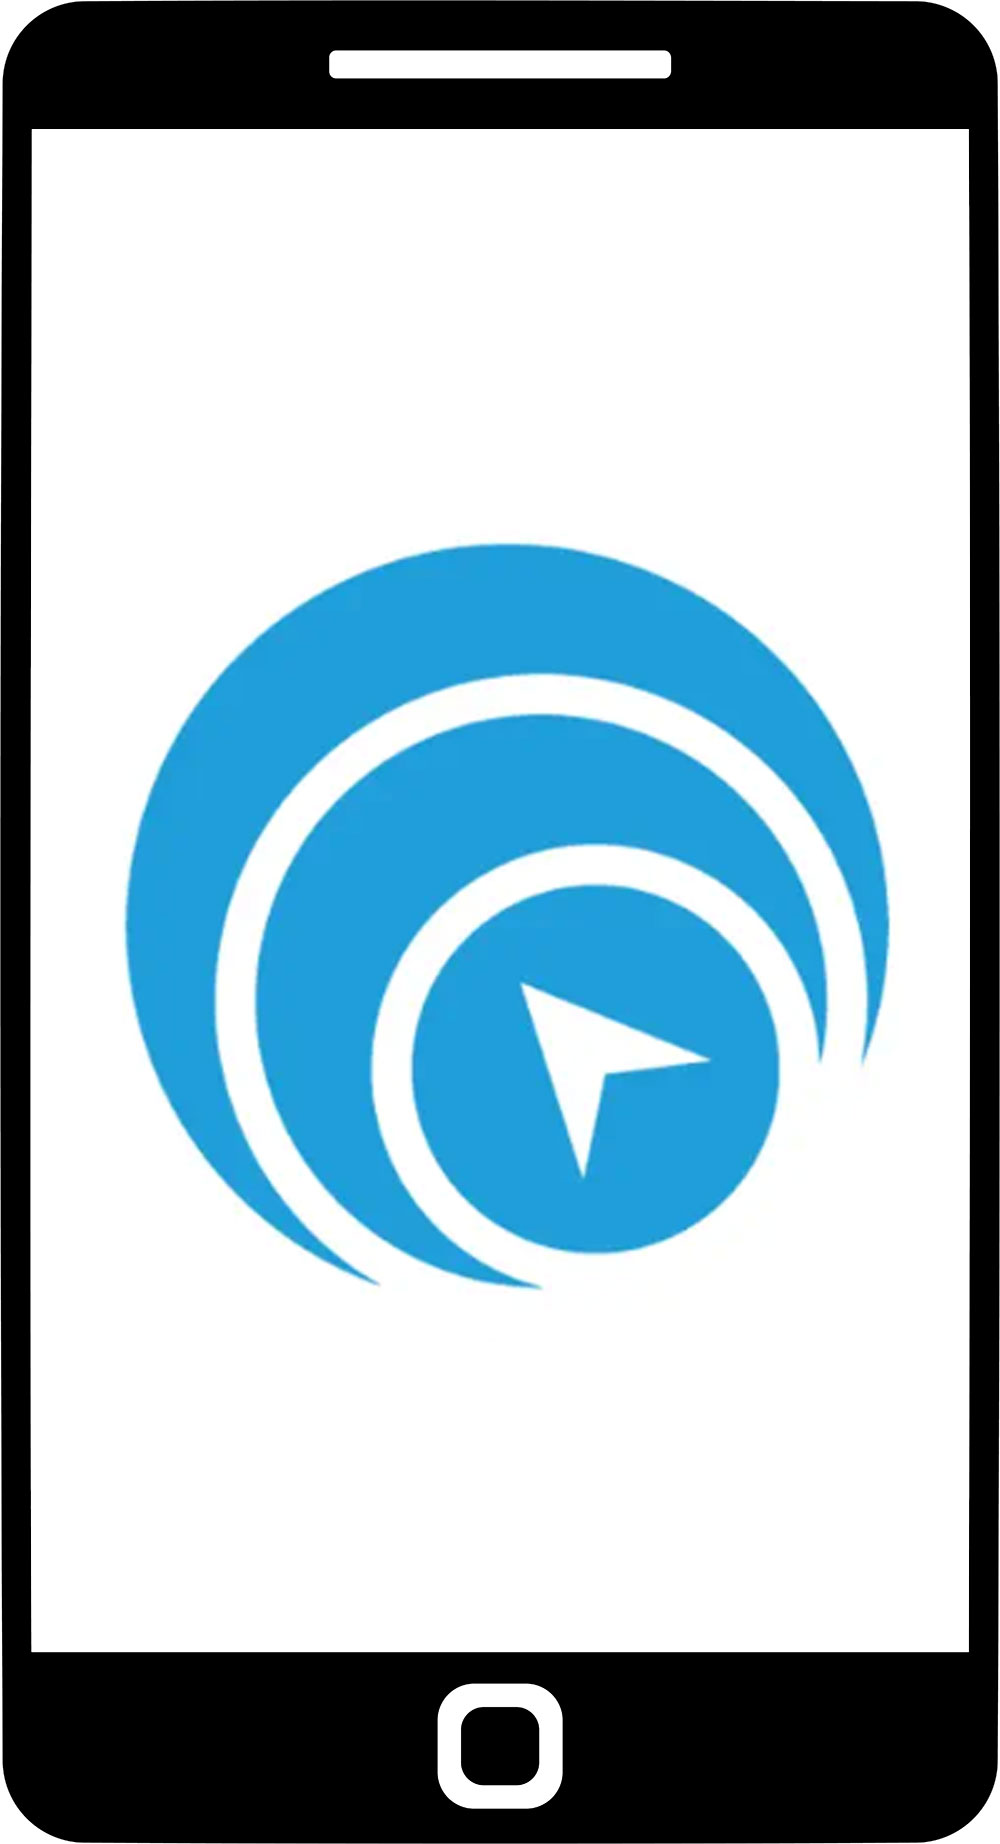 Daymap logo on mobile screen.